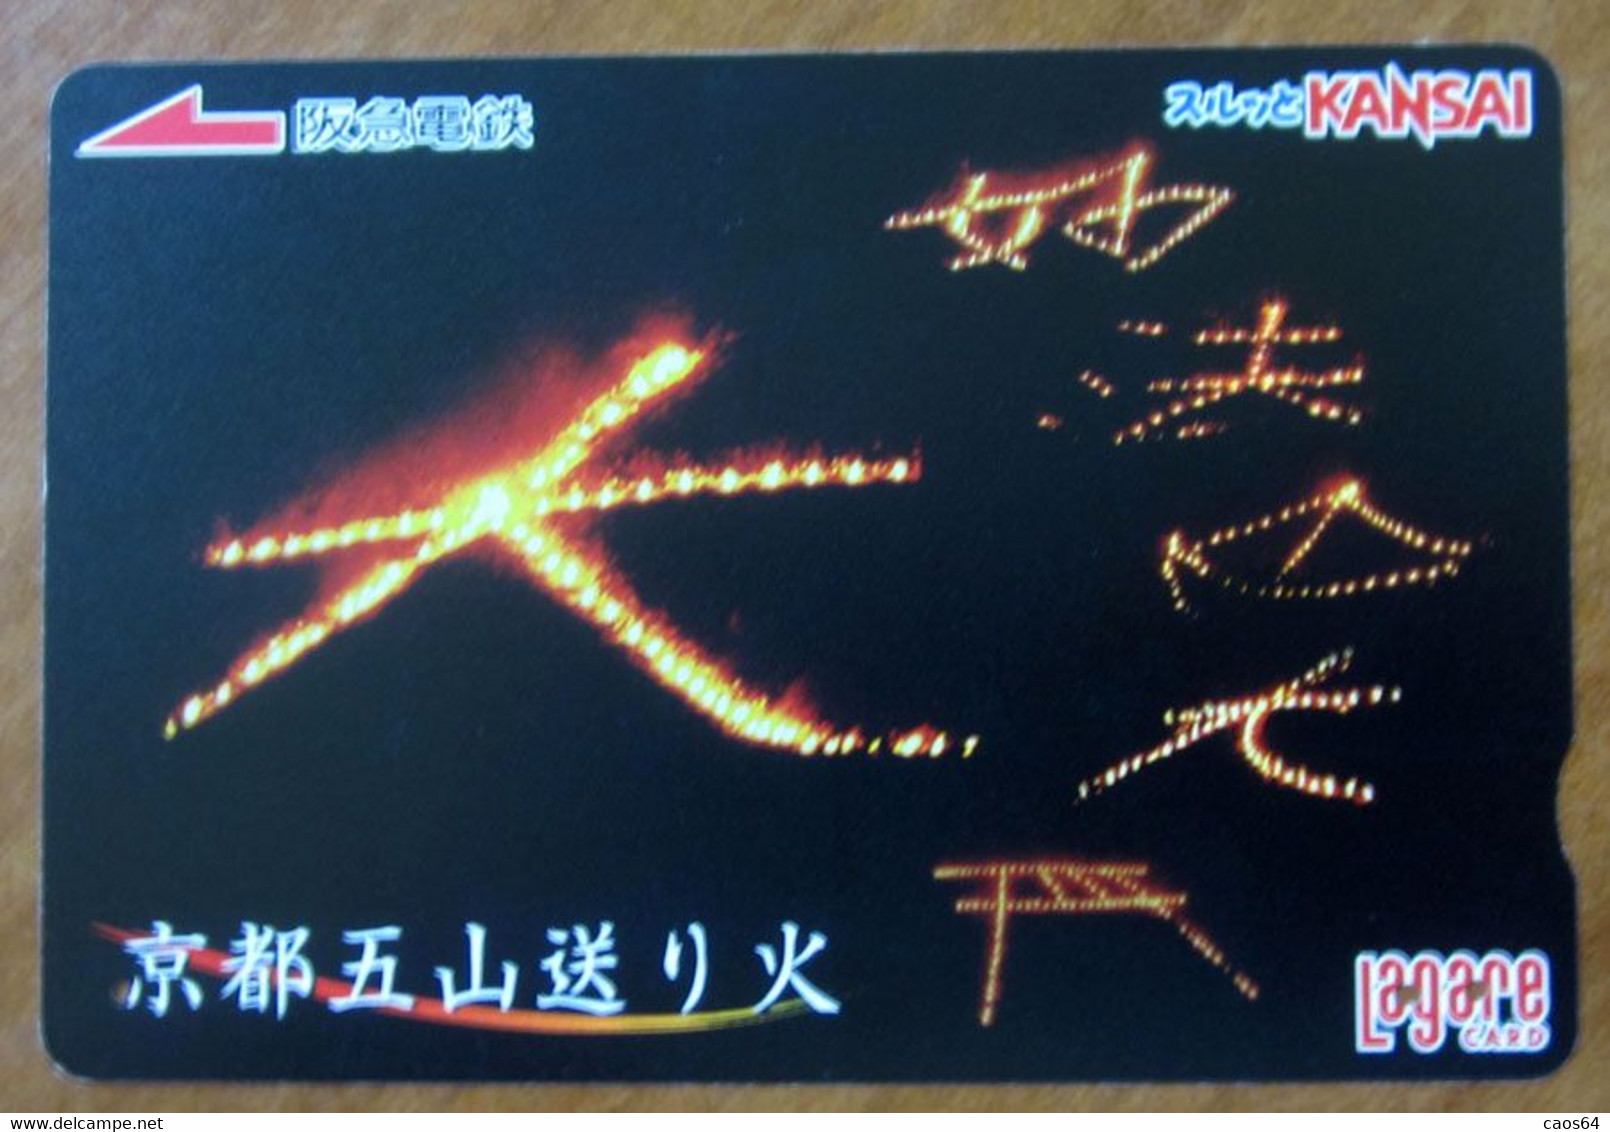 GIAPPONE Ticket Biglietto Alfabeto Lettere - Kansai Railway  Card 1.000 ¥ - Usato - Mondo